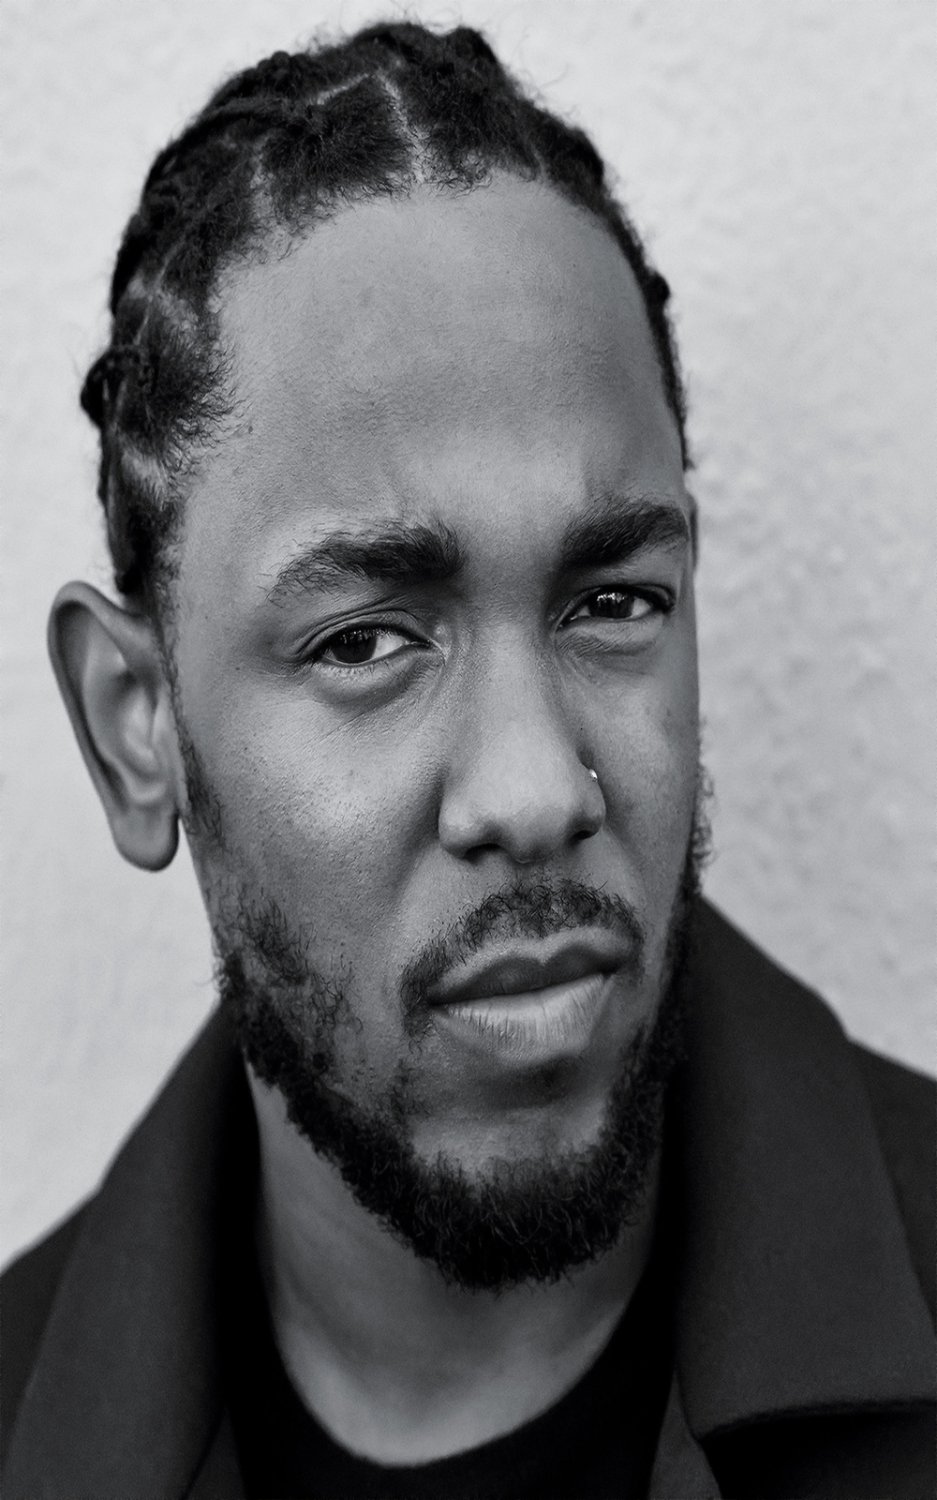 Kendrick Lamar  13"x19" (32cm/49cm) Poster